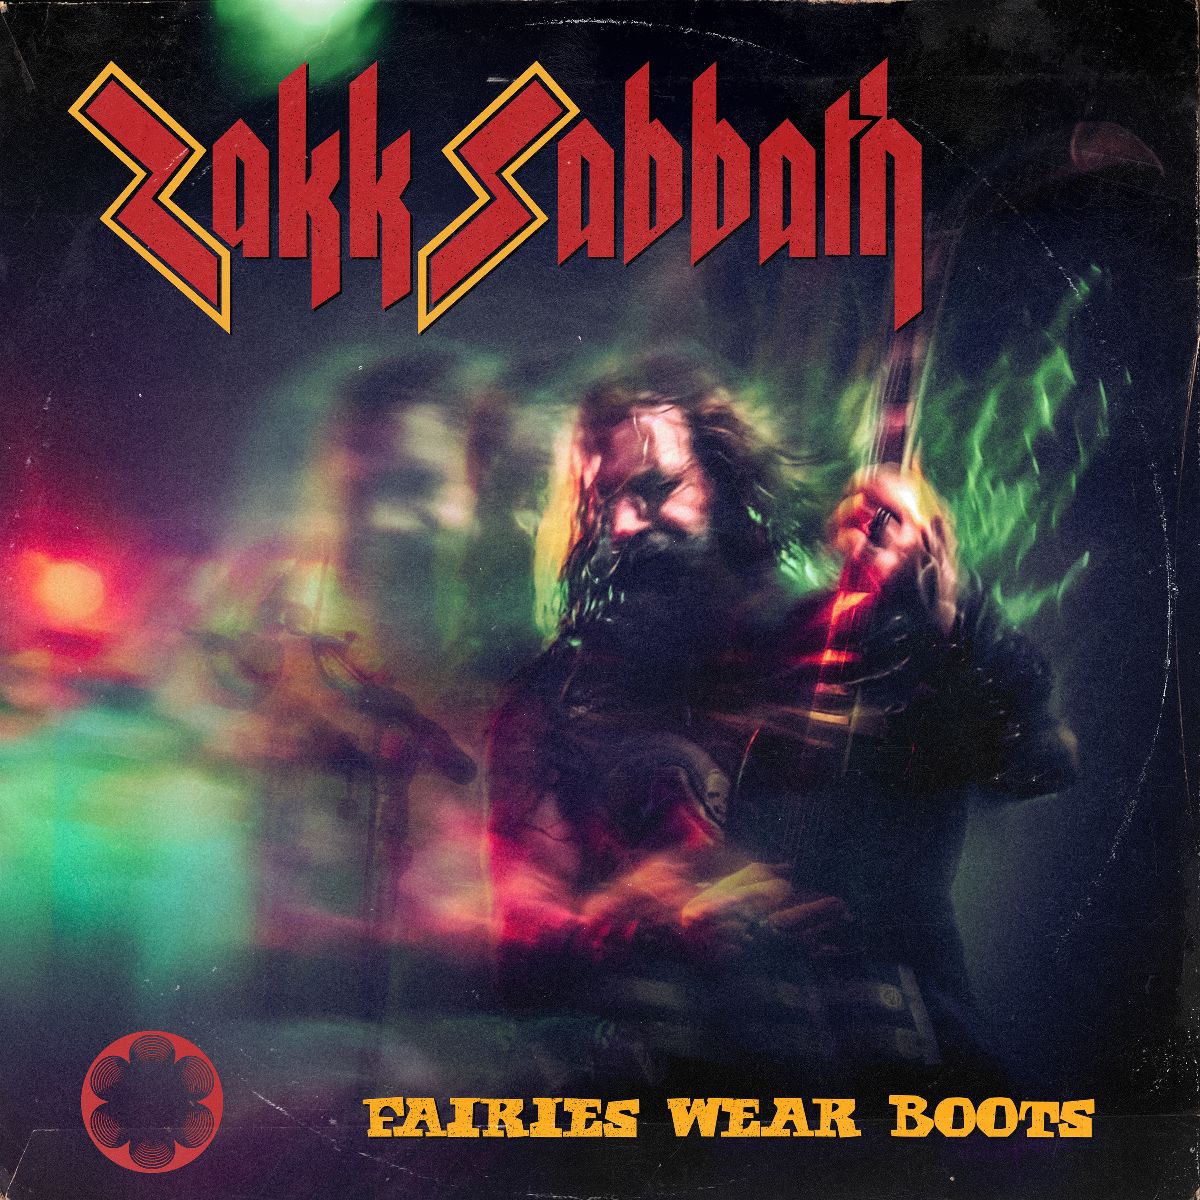 ZAKK SABBATH single cover "Fairies Wear Boots"